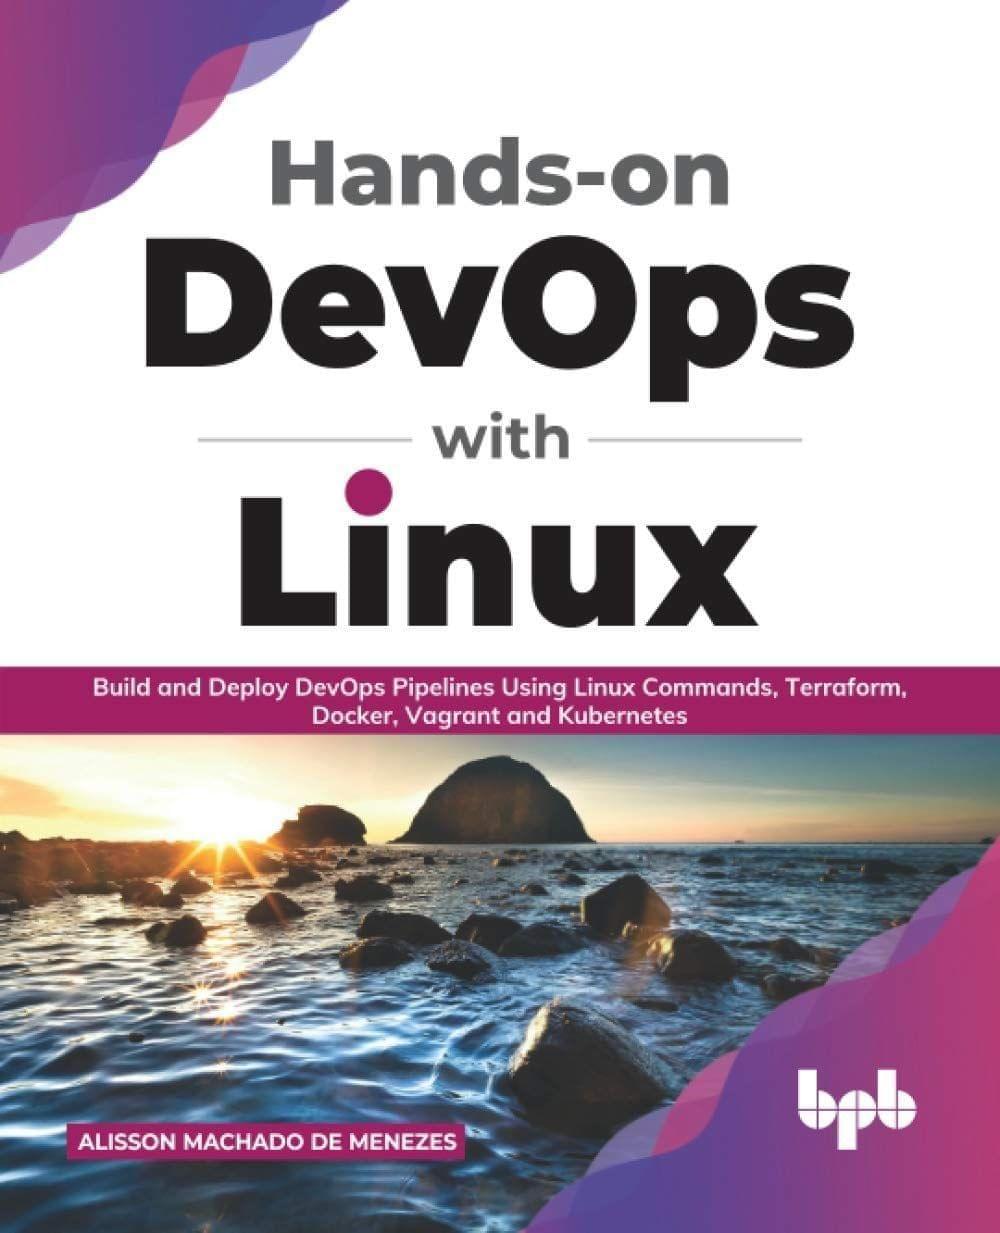 Hands-on DevOps with Linux [Paperback] Menezes, Alisson Machado de